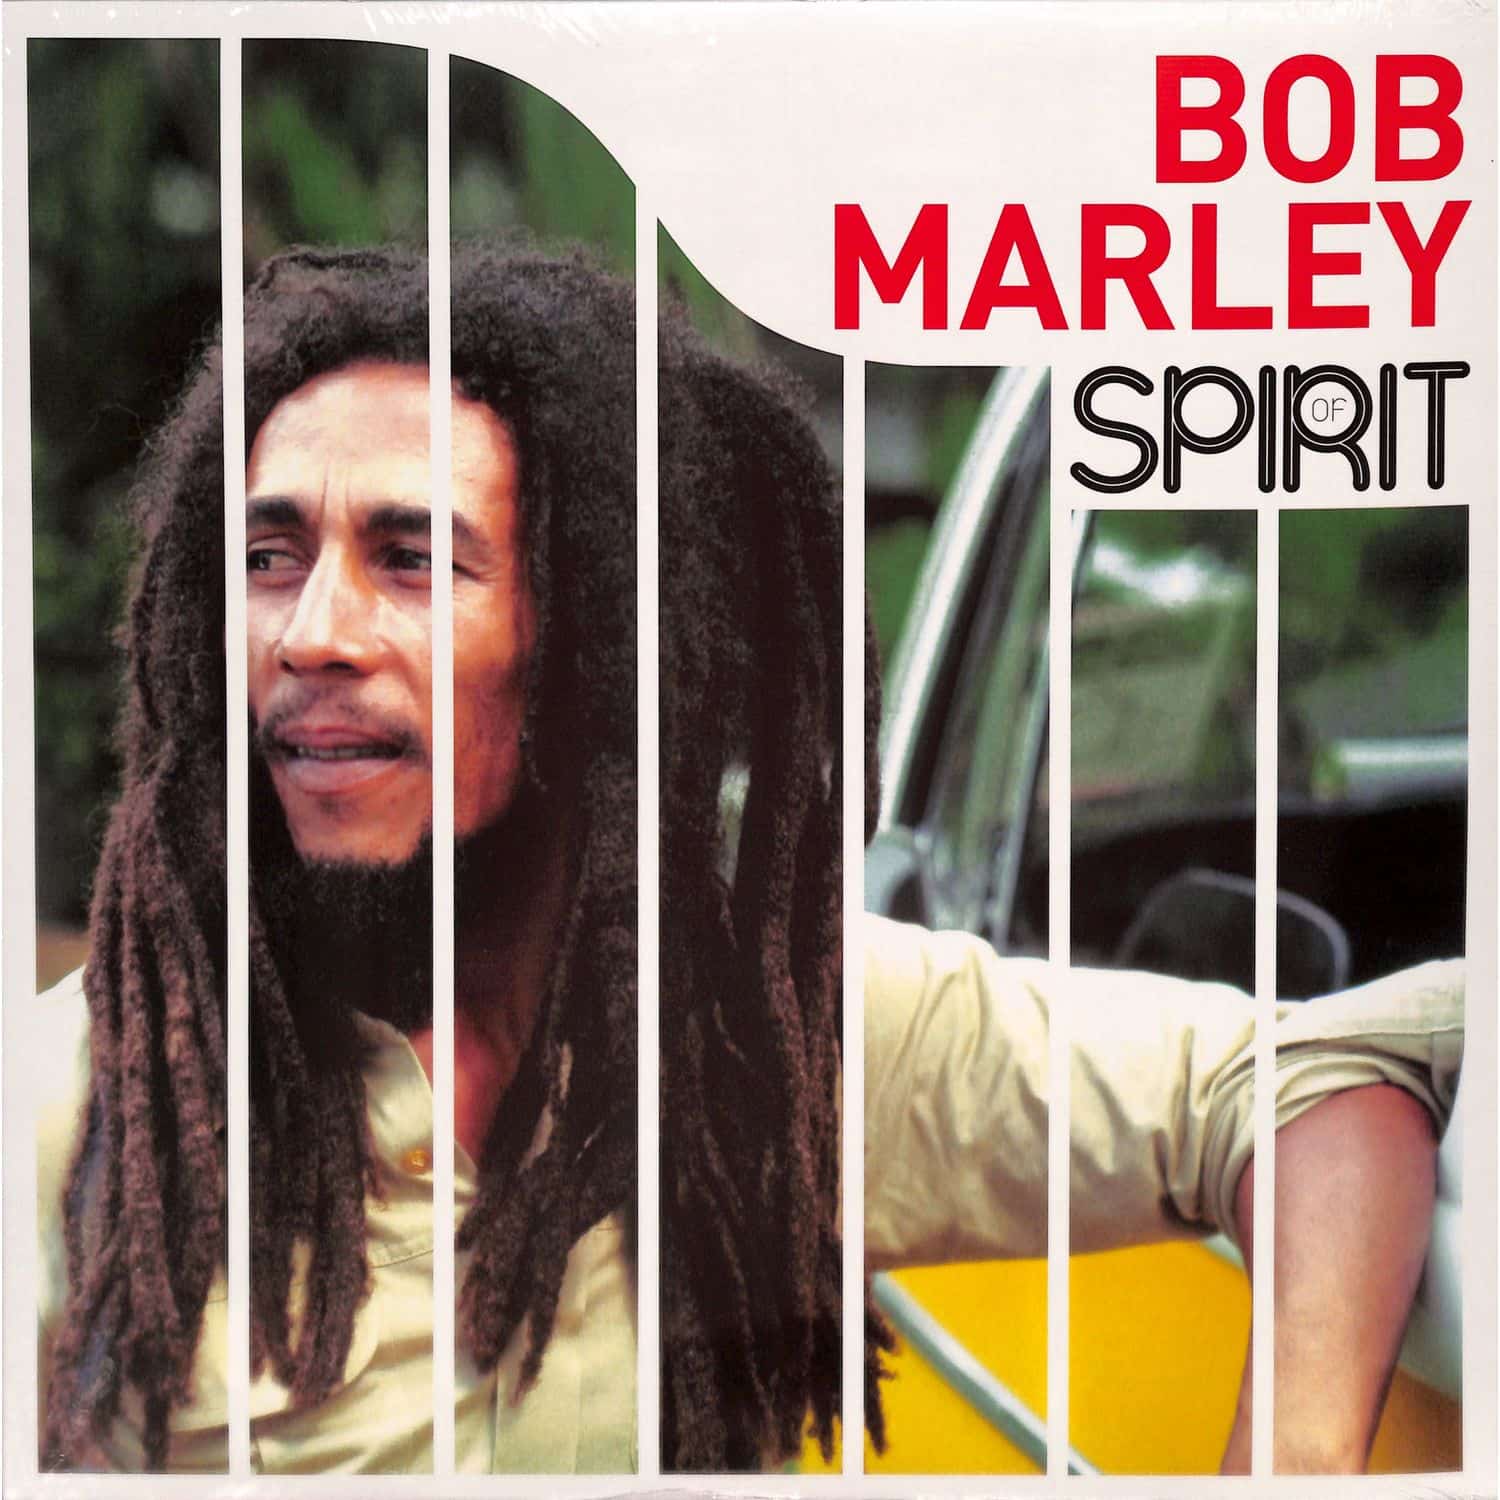 Bob Marley - SPIRIT OF 